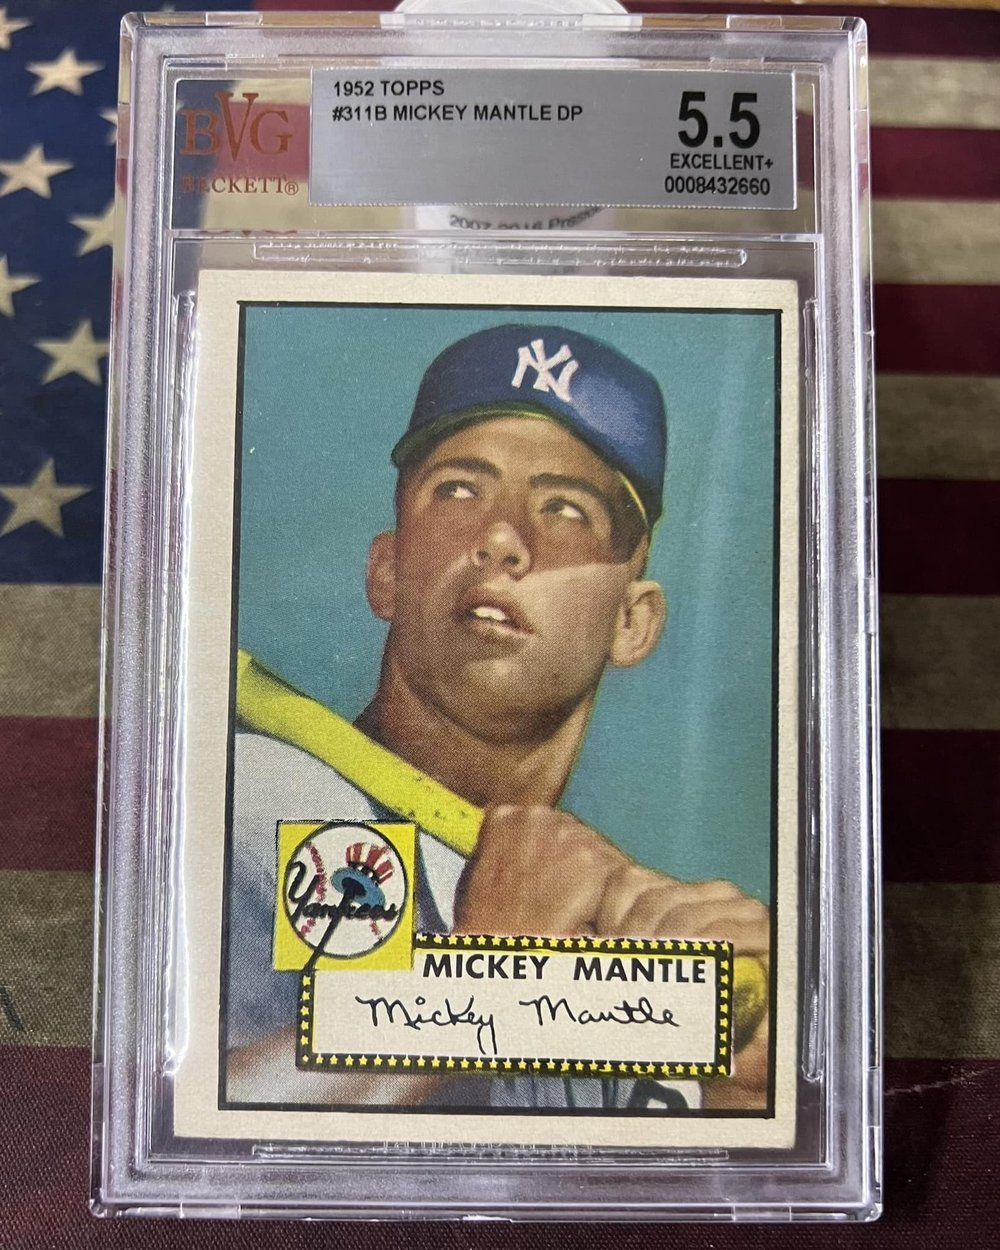 1952 Topps Mickey Mantle Rookie Card
.
.
.
.
.
.
#baseballcards #mickeymantle #mickeymantlerookie #1952topps #yankees #yankeesbaseball #mickeymantlebaseballcard #marilynmonroe #americaspastime #baseball